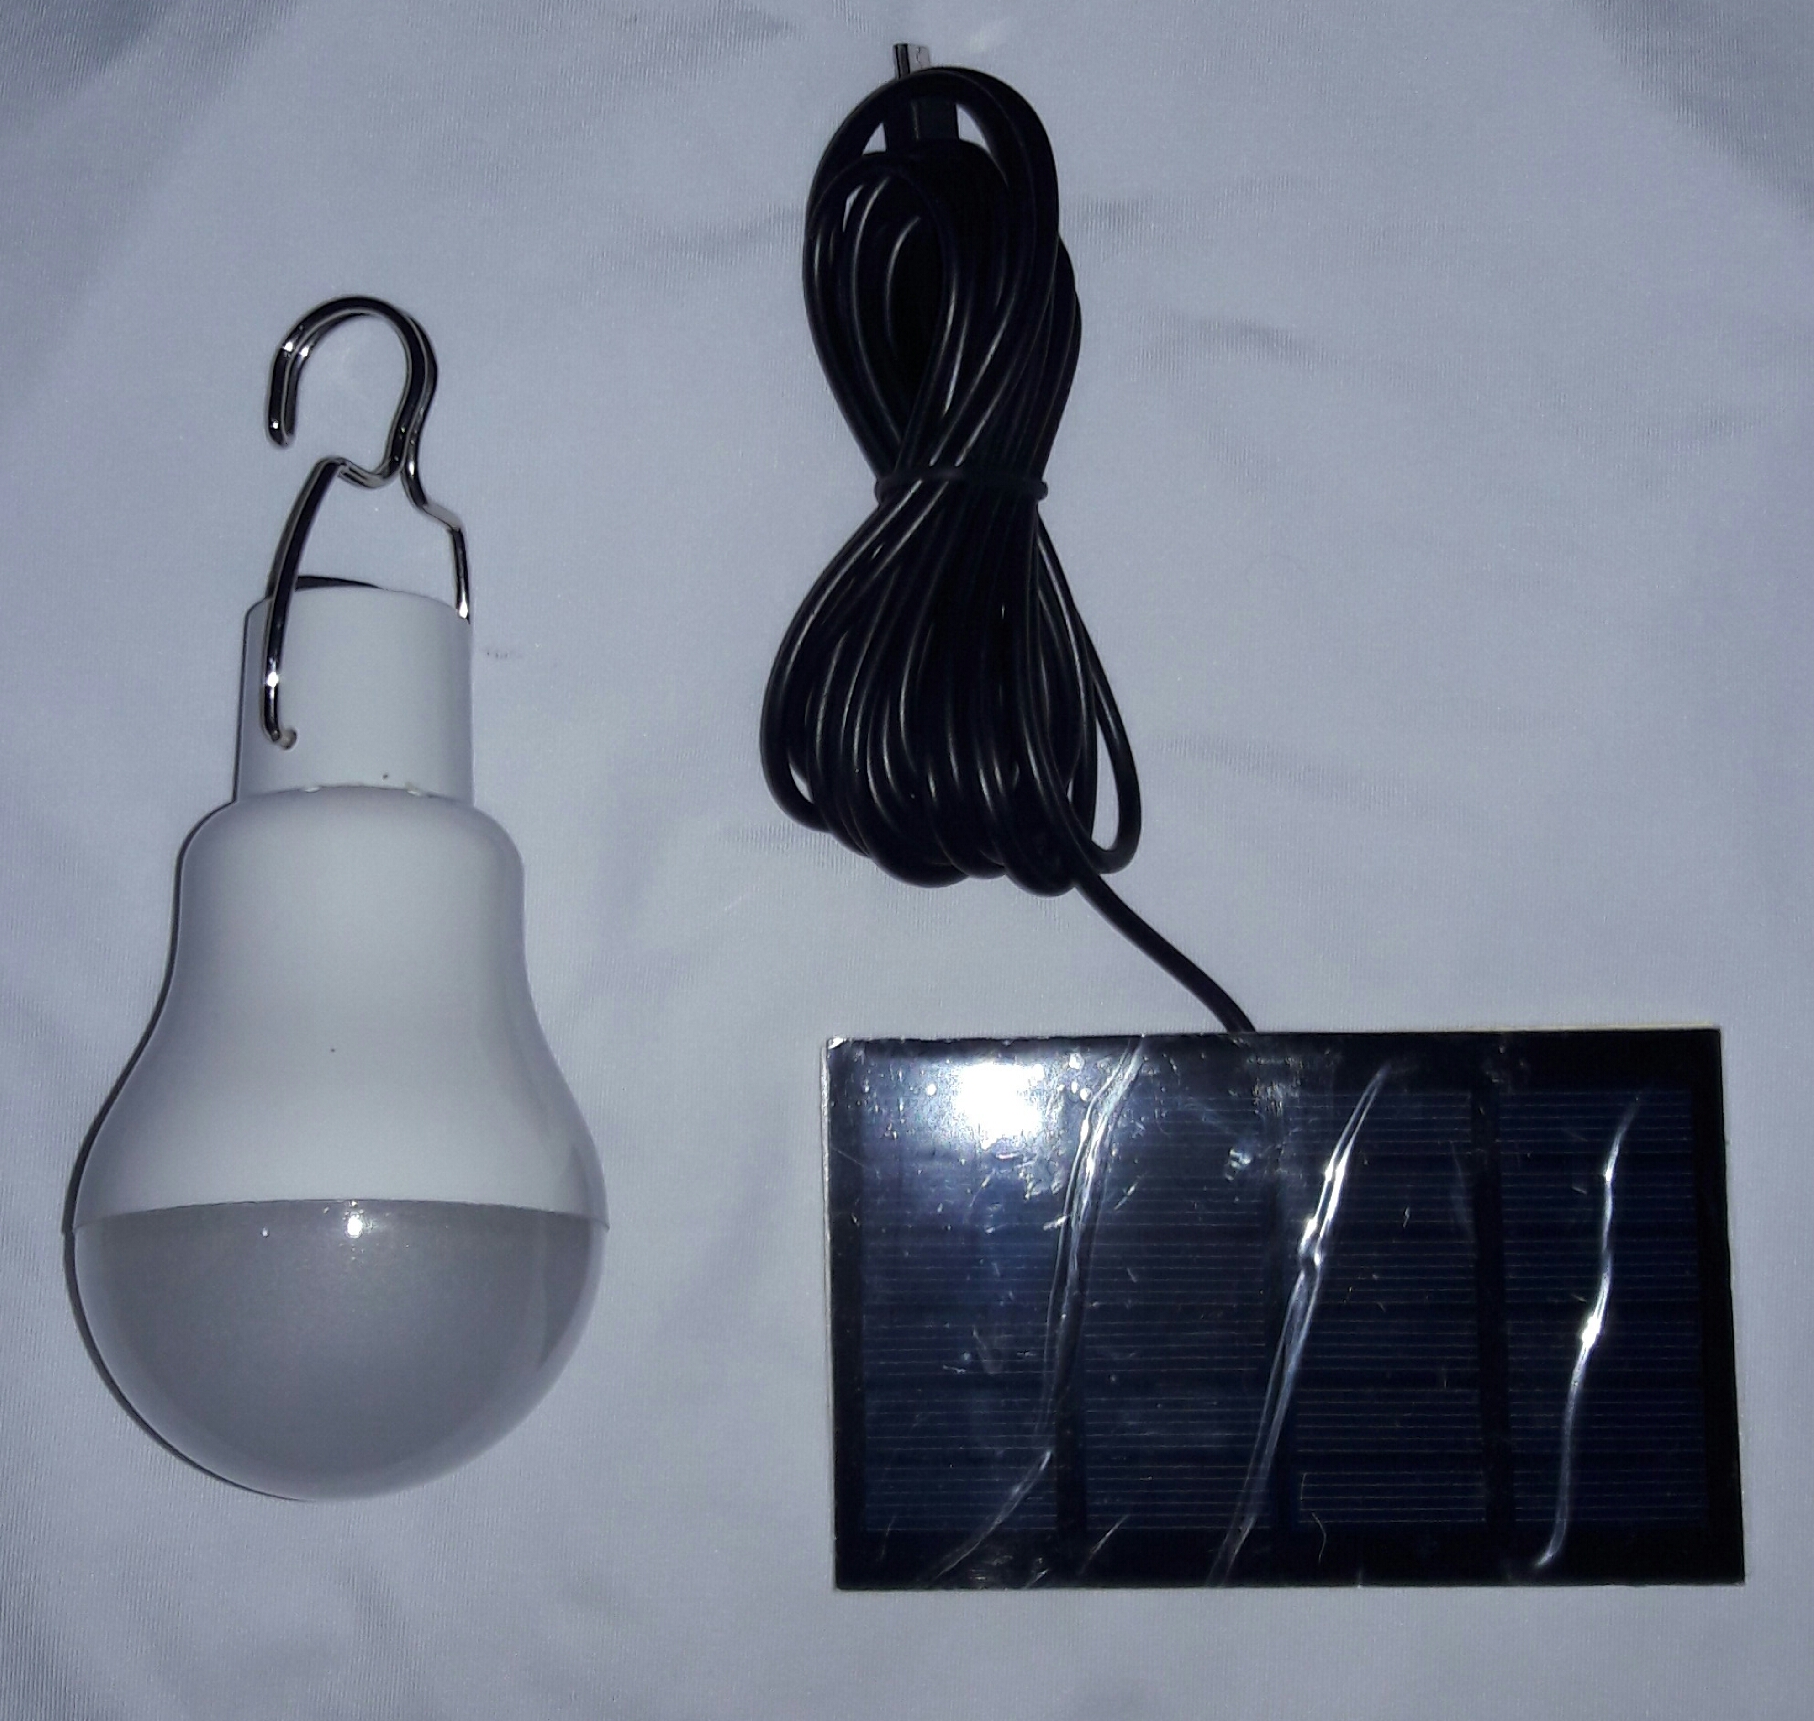 BEL Solar Light Bulbs/ Rechargeable